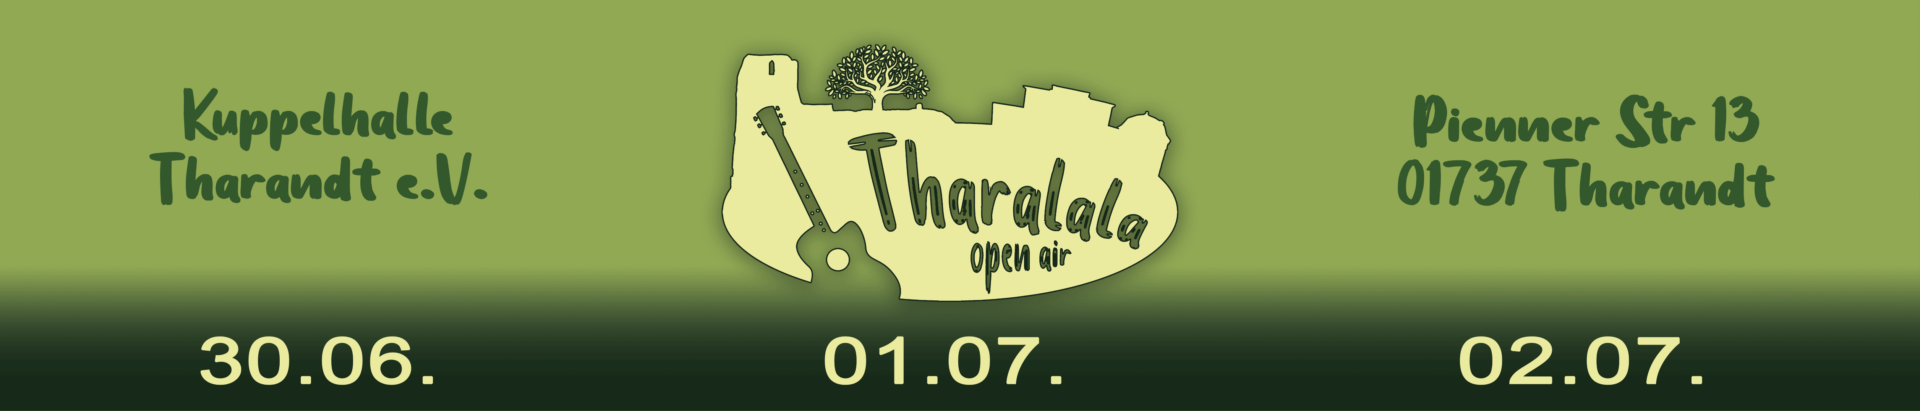 Tharalala